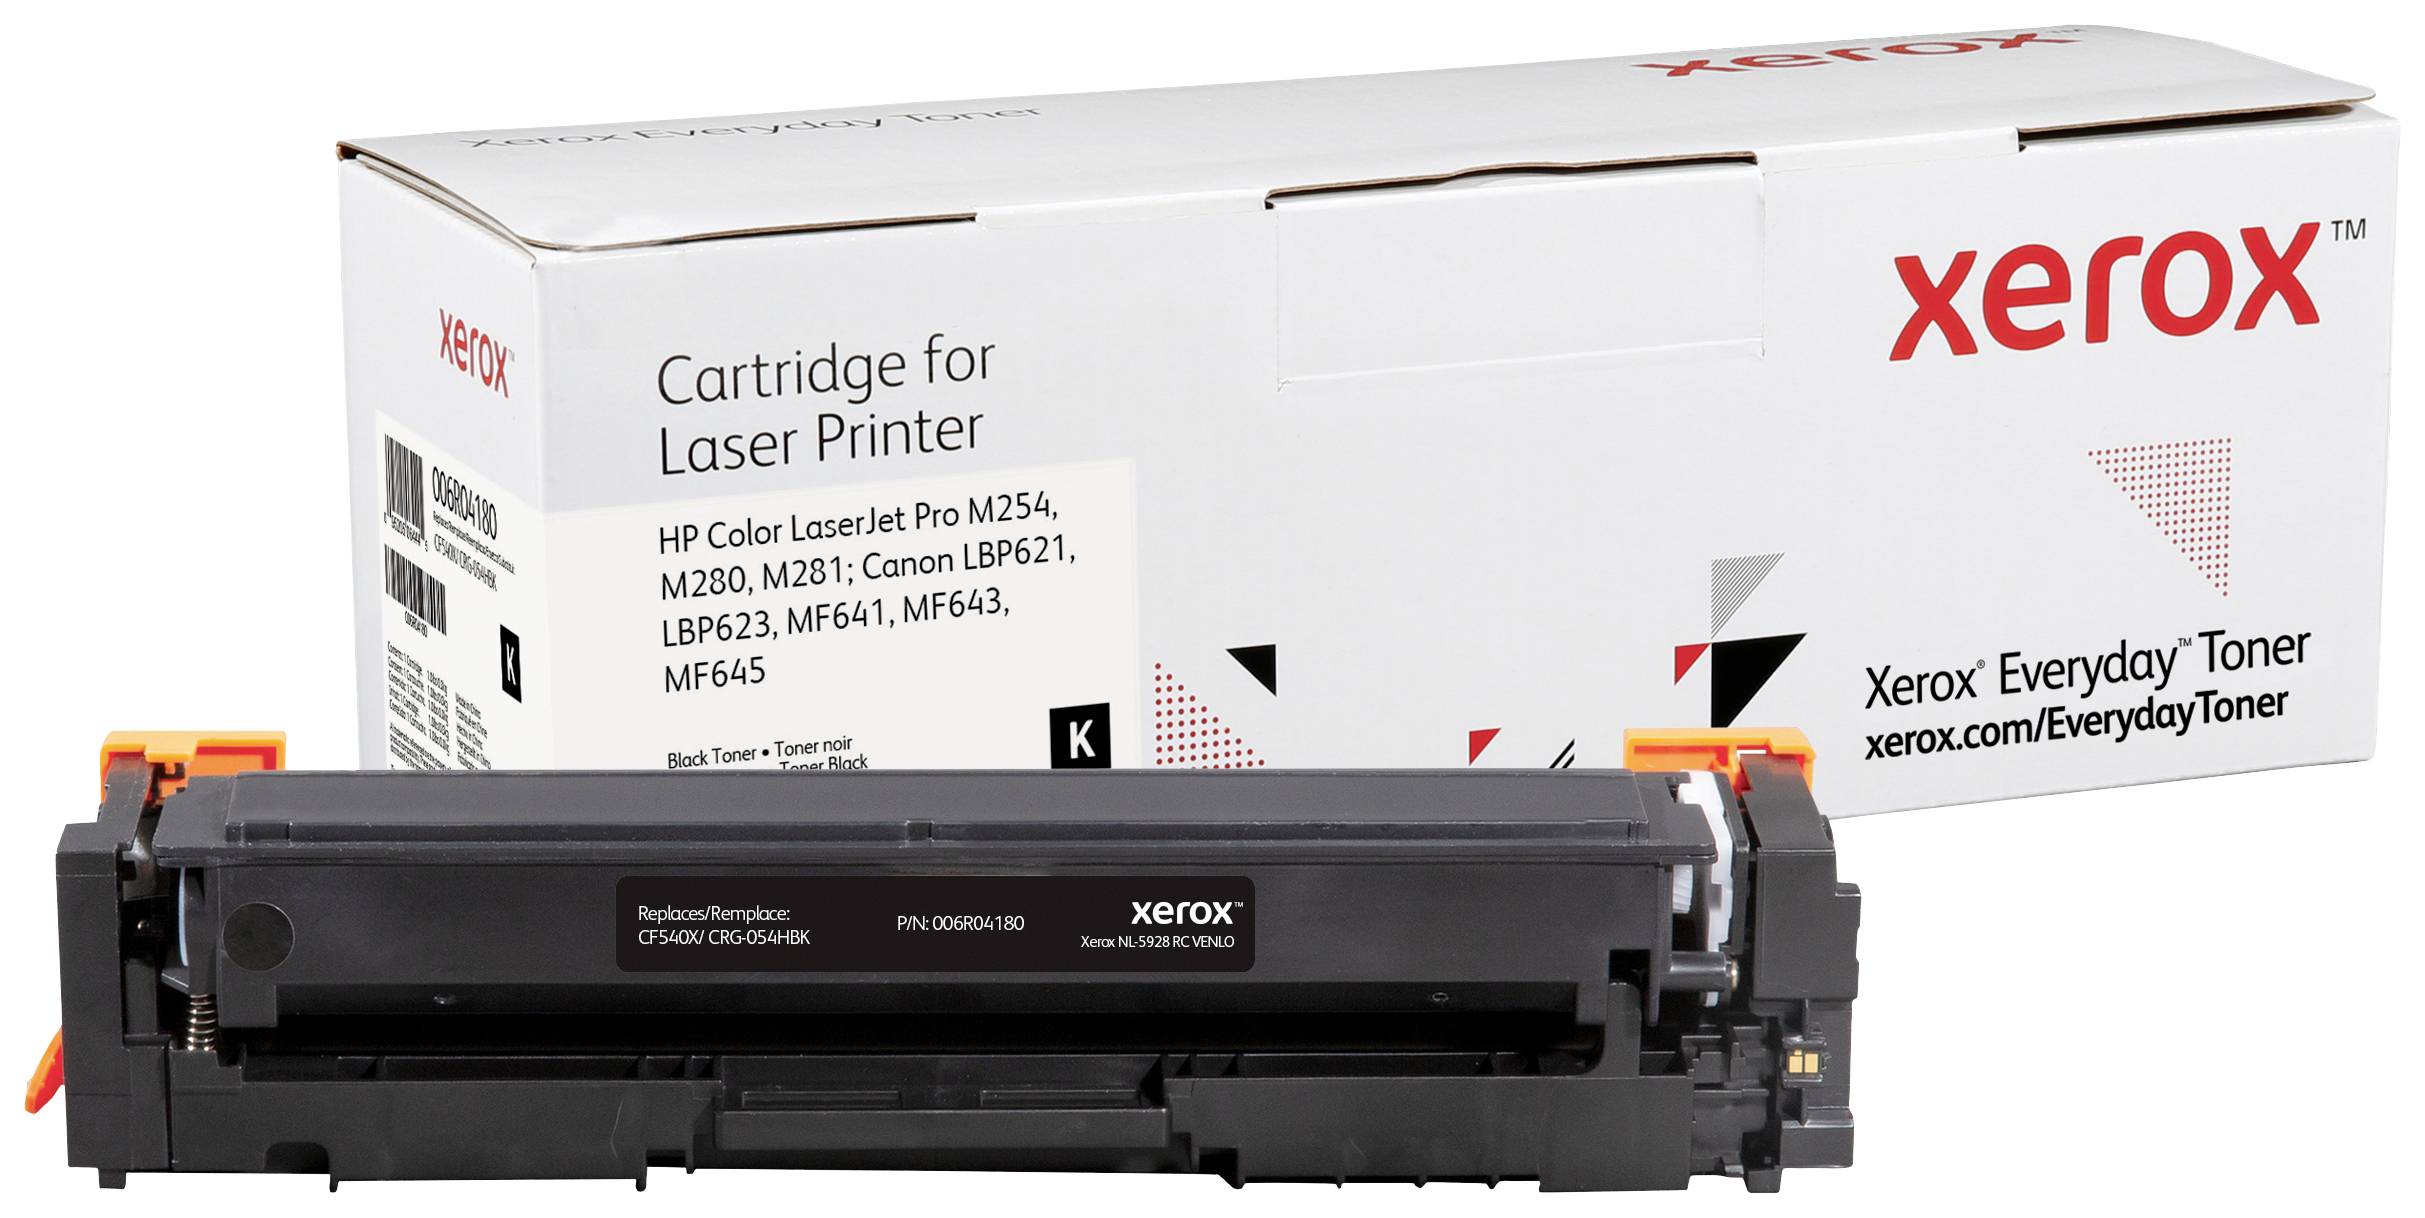 hebzuchtig procedure pit Xerox Everyday Toner Single replaced HP, Canon 202X (CF540X/CRG-054HBK)  Black 3200 Sides Compatible Toner cartridge | Conrad.com